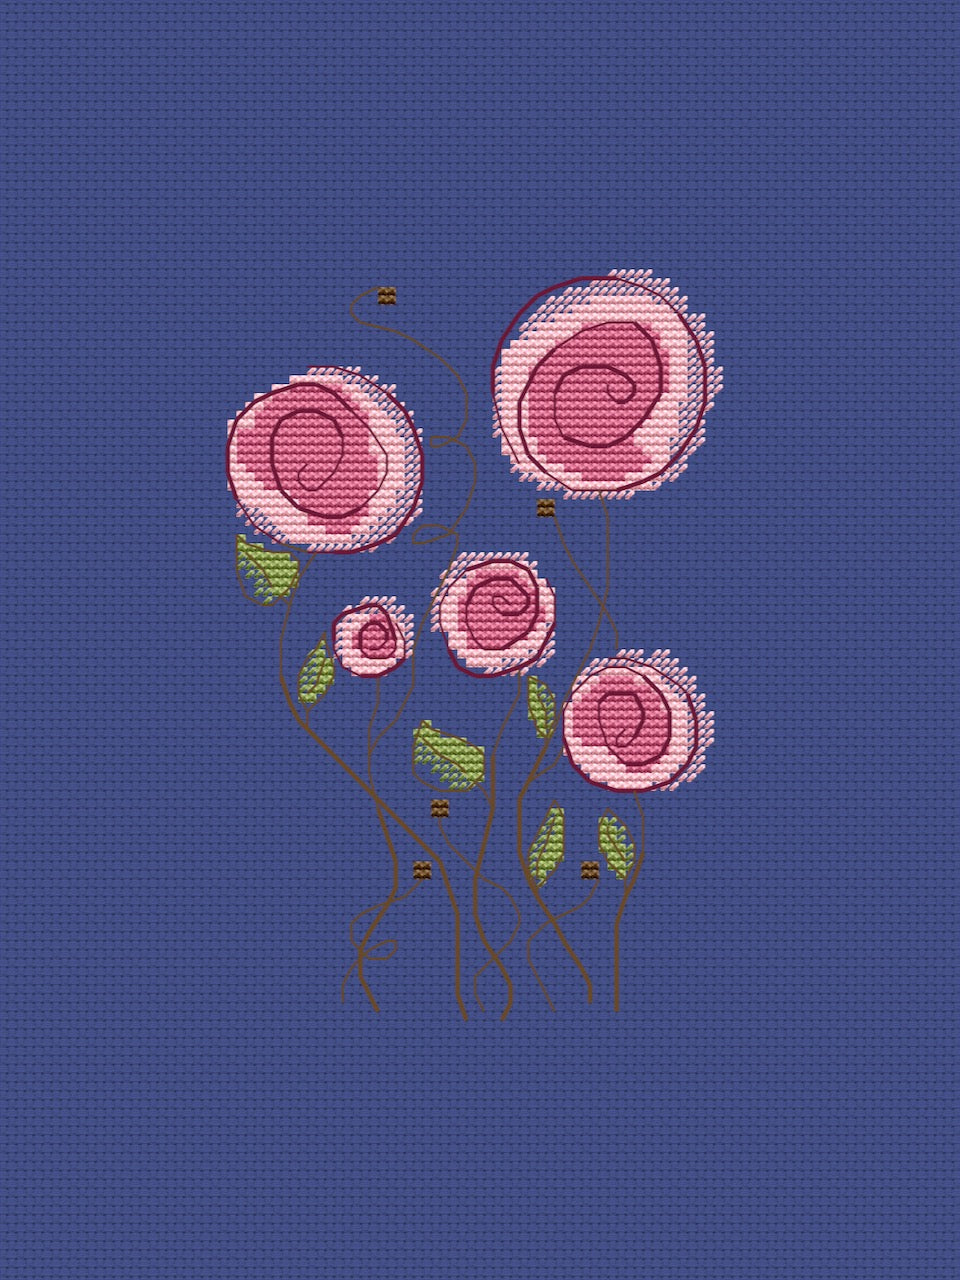 Pink Flowers cross stitch pattern-2